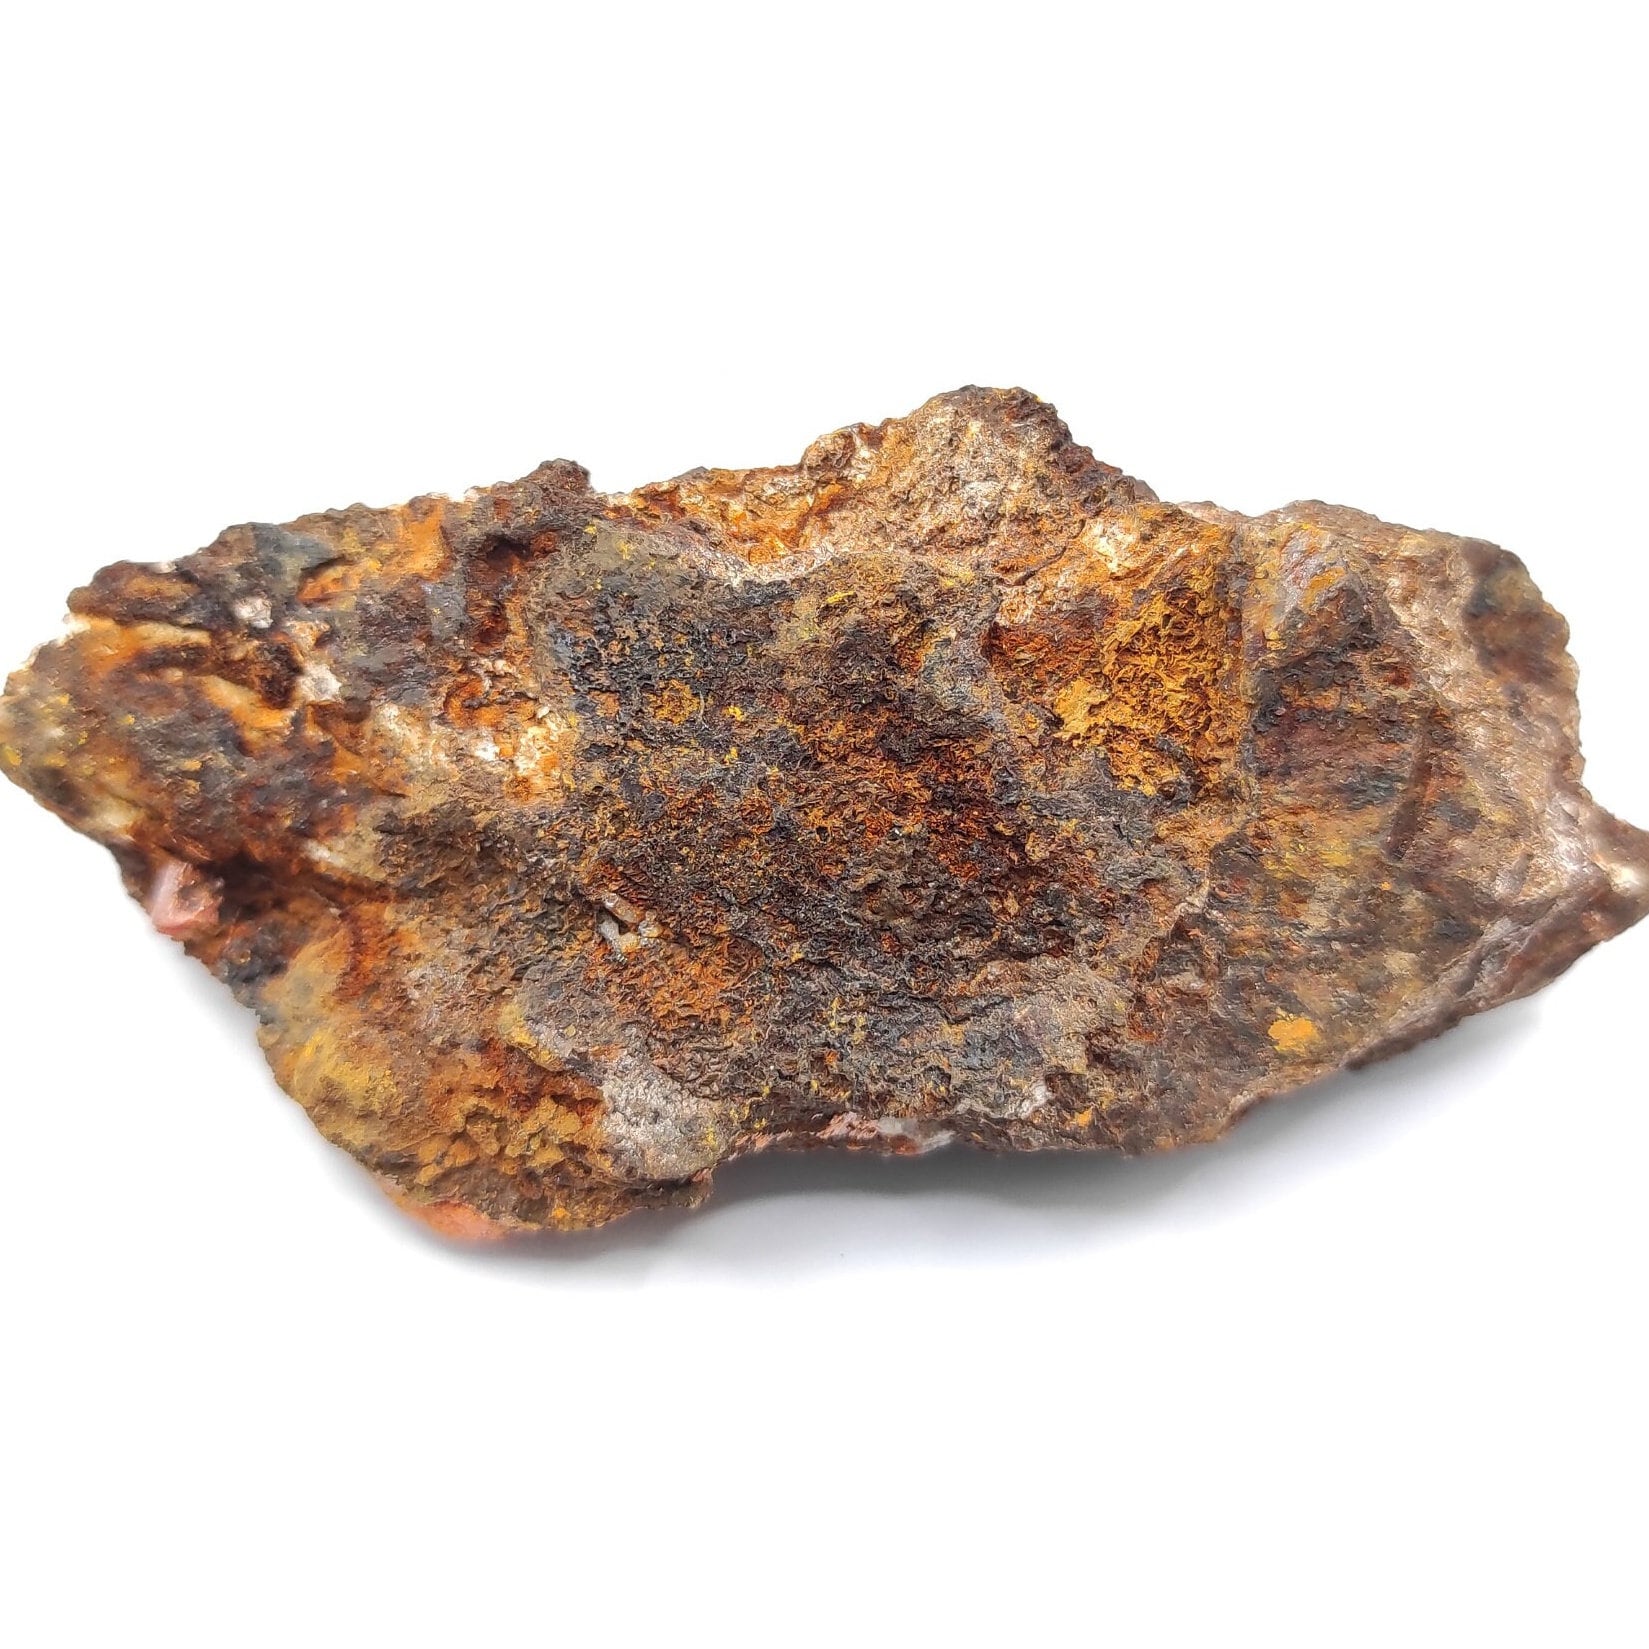 69g Crocoite Specimen from Australia - Orange Crocoite Mineral Specimen - Raw Crocoite Crystal - Rare Minerals - Tasmania, Australia